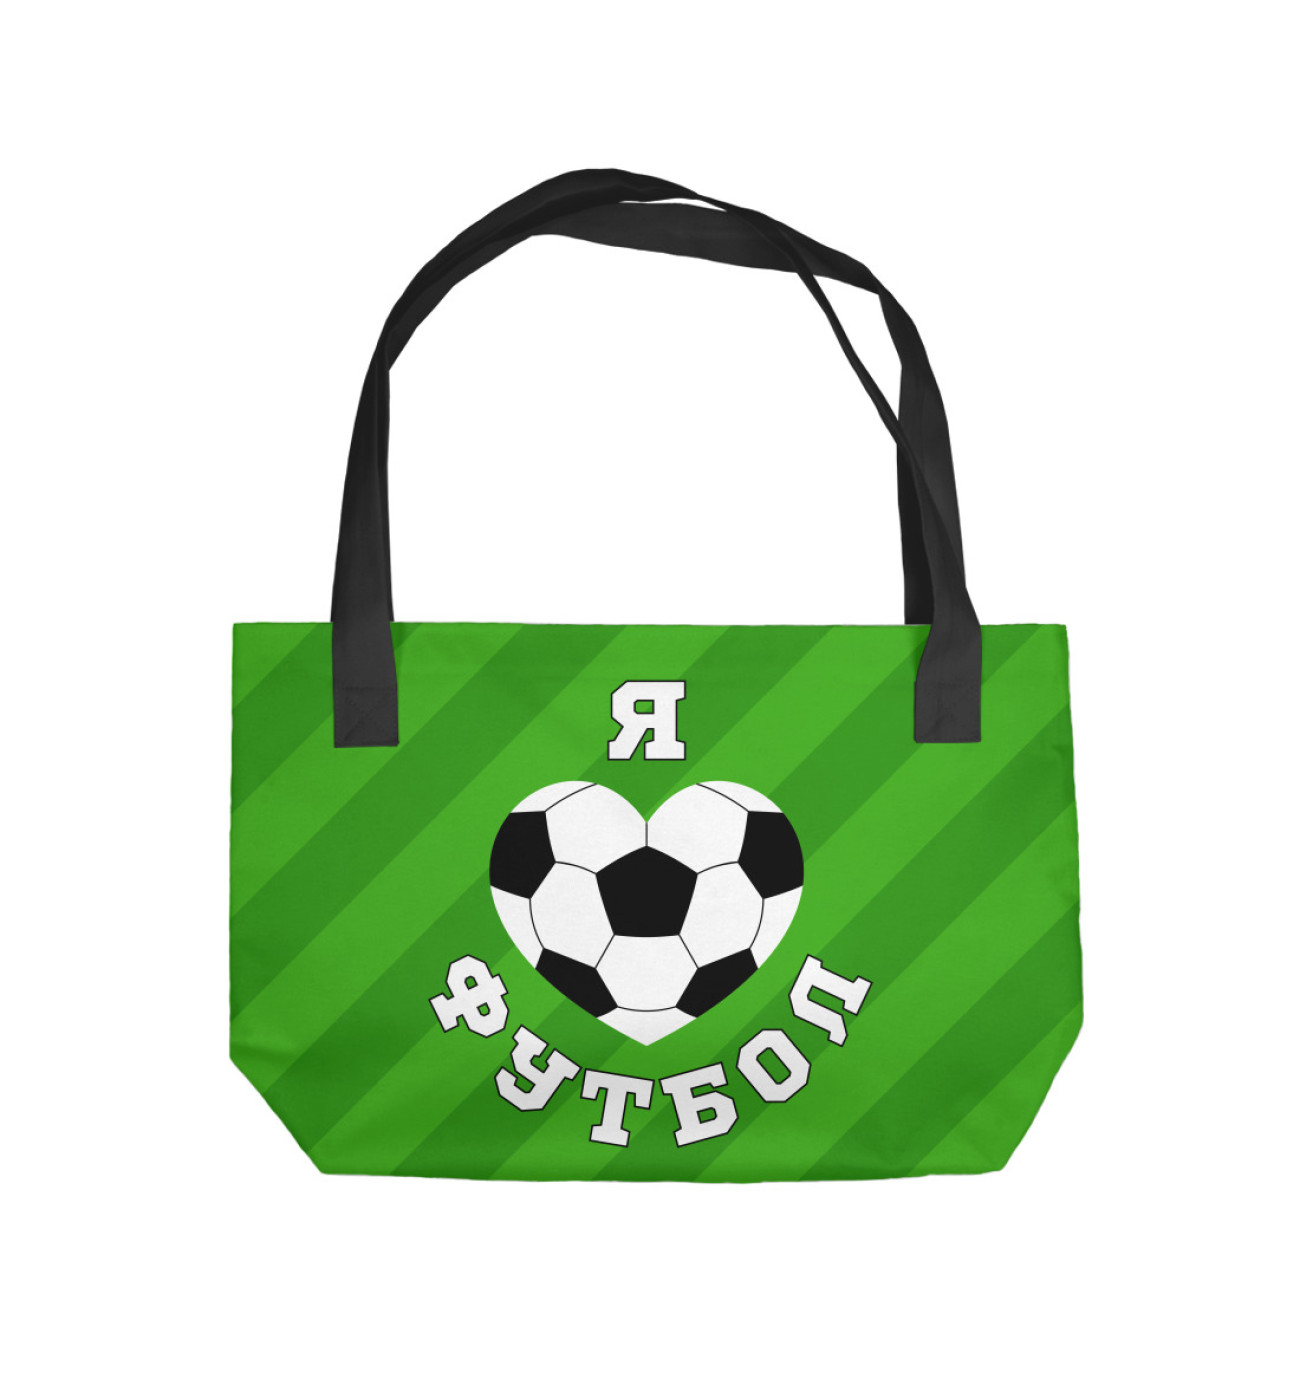 Пляжная сумка Я люблю футбол, артикул: FTO-960307-sup